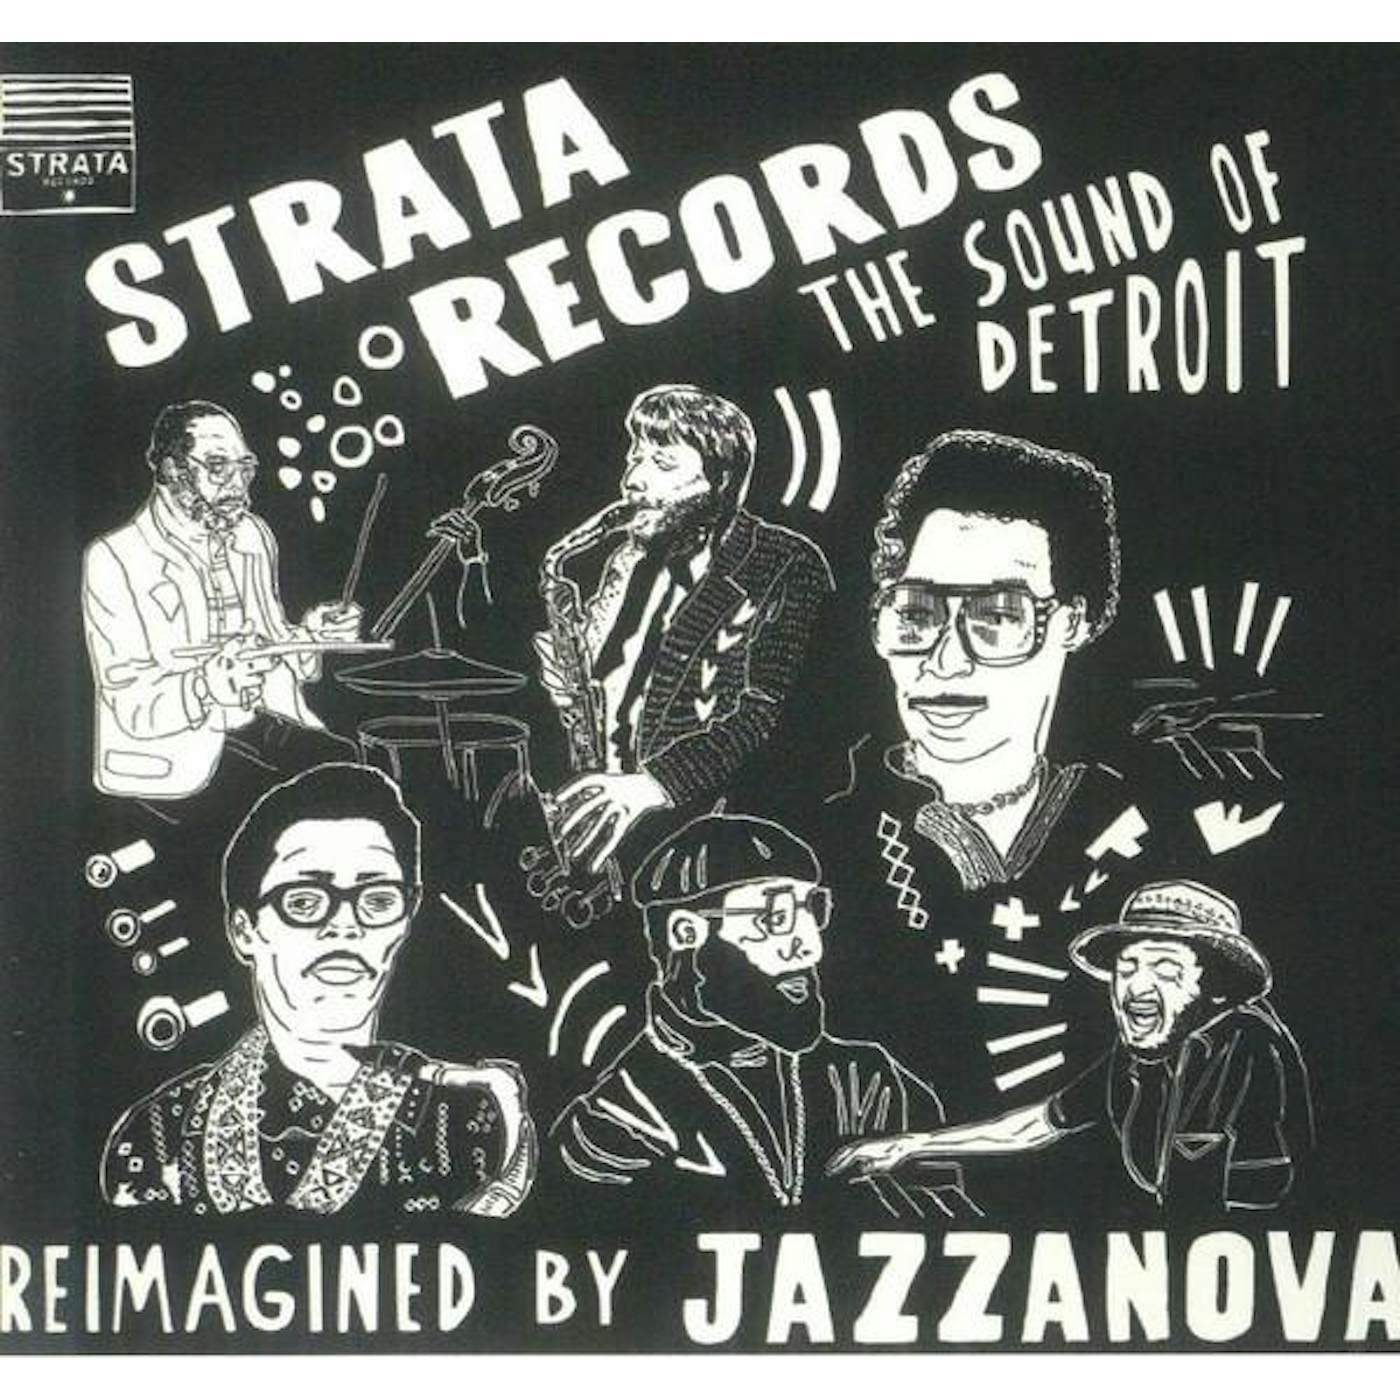 Jazzanova STRATA RECORDS - THE SOUND OF DETROIT - REIMAGINED CD